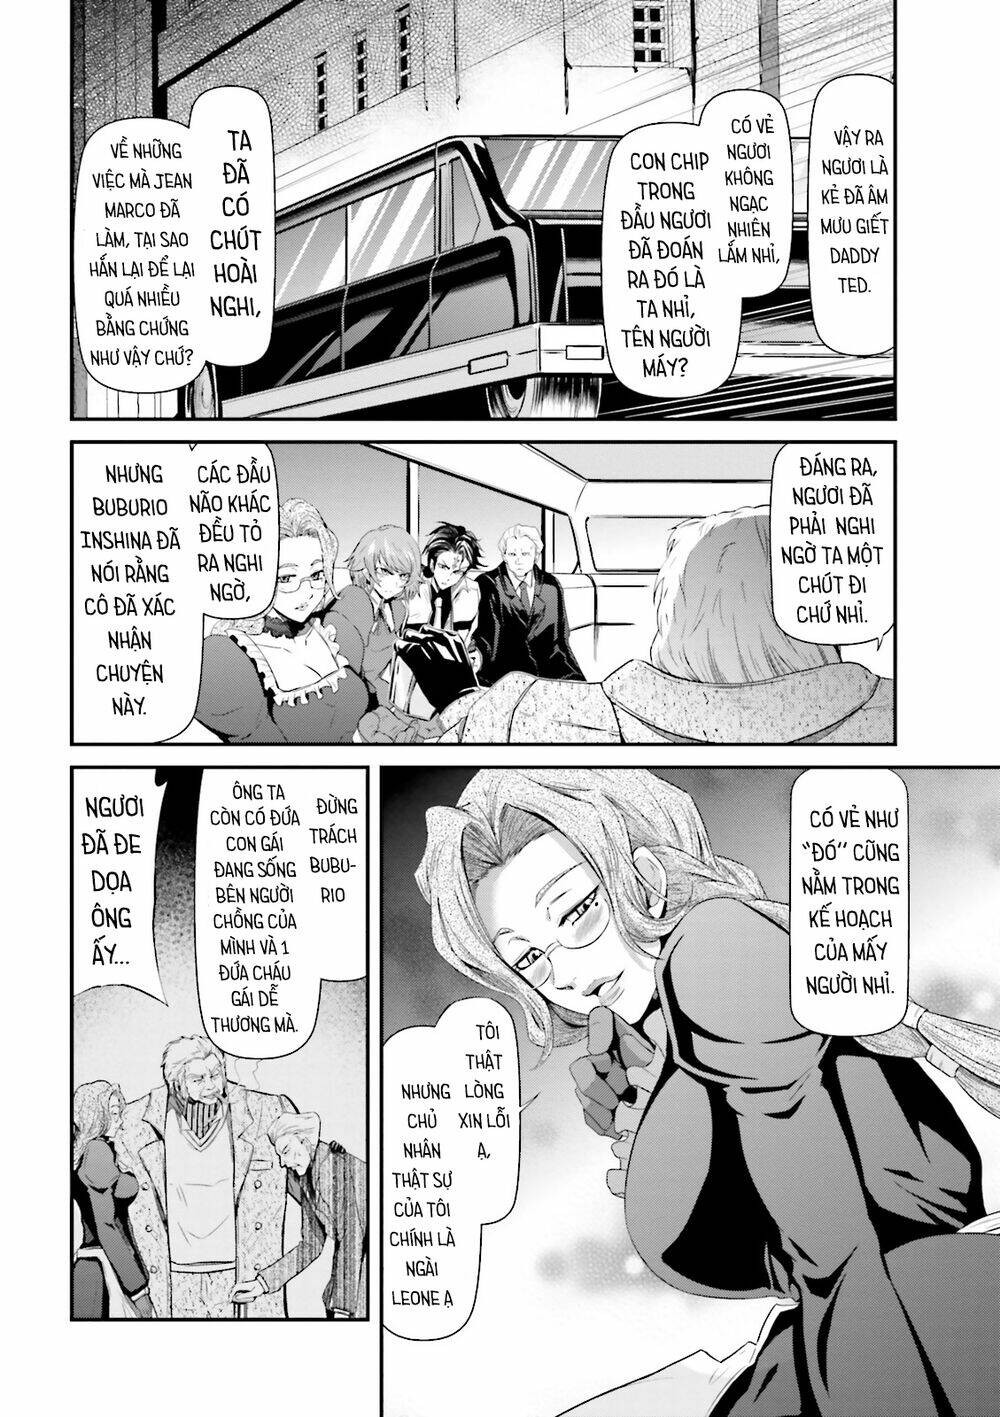 Mobile Suit Gundam Iron-Blooded Orphans Gekko: Chapter 4